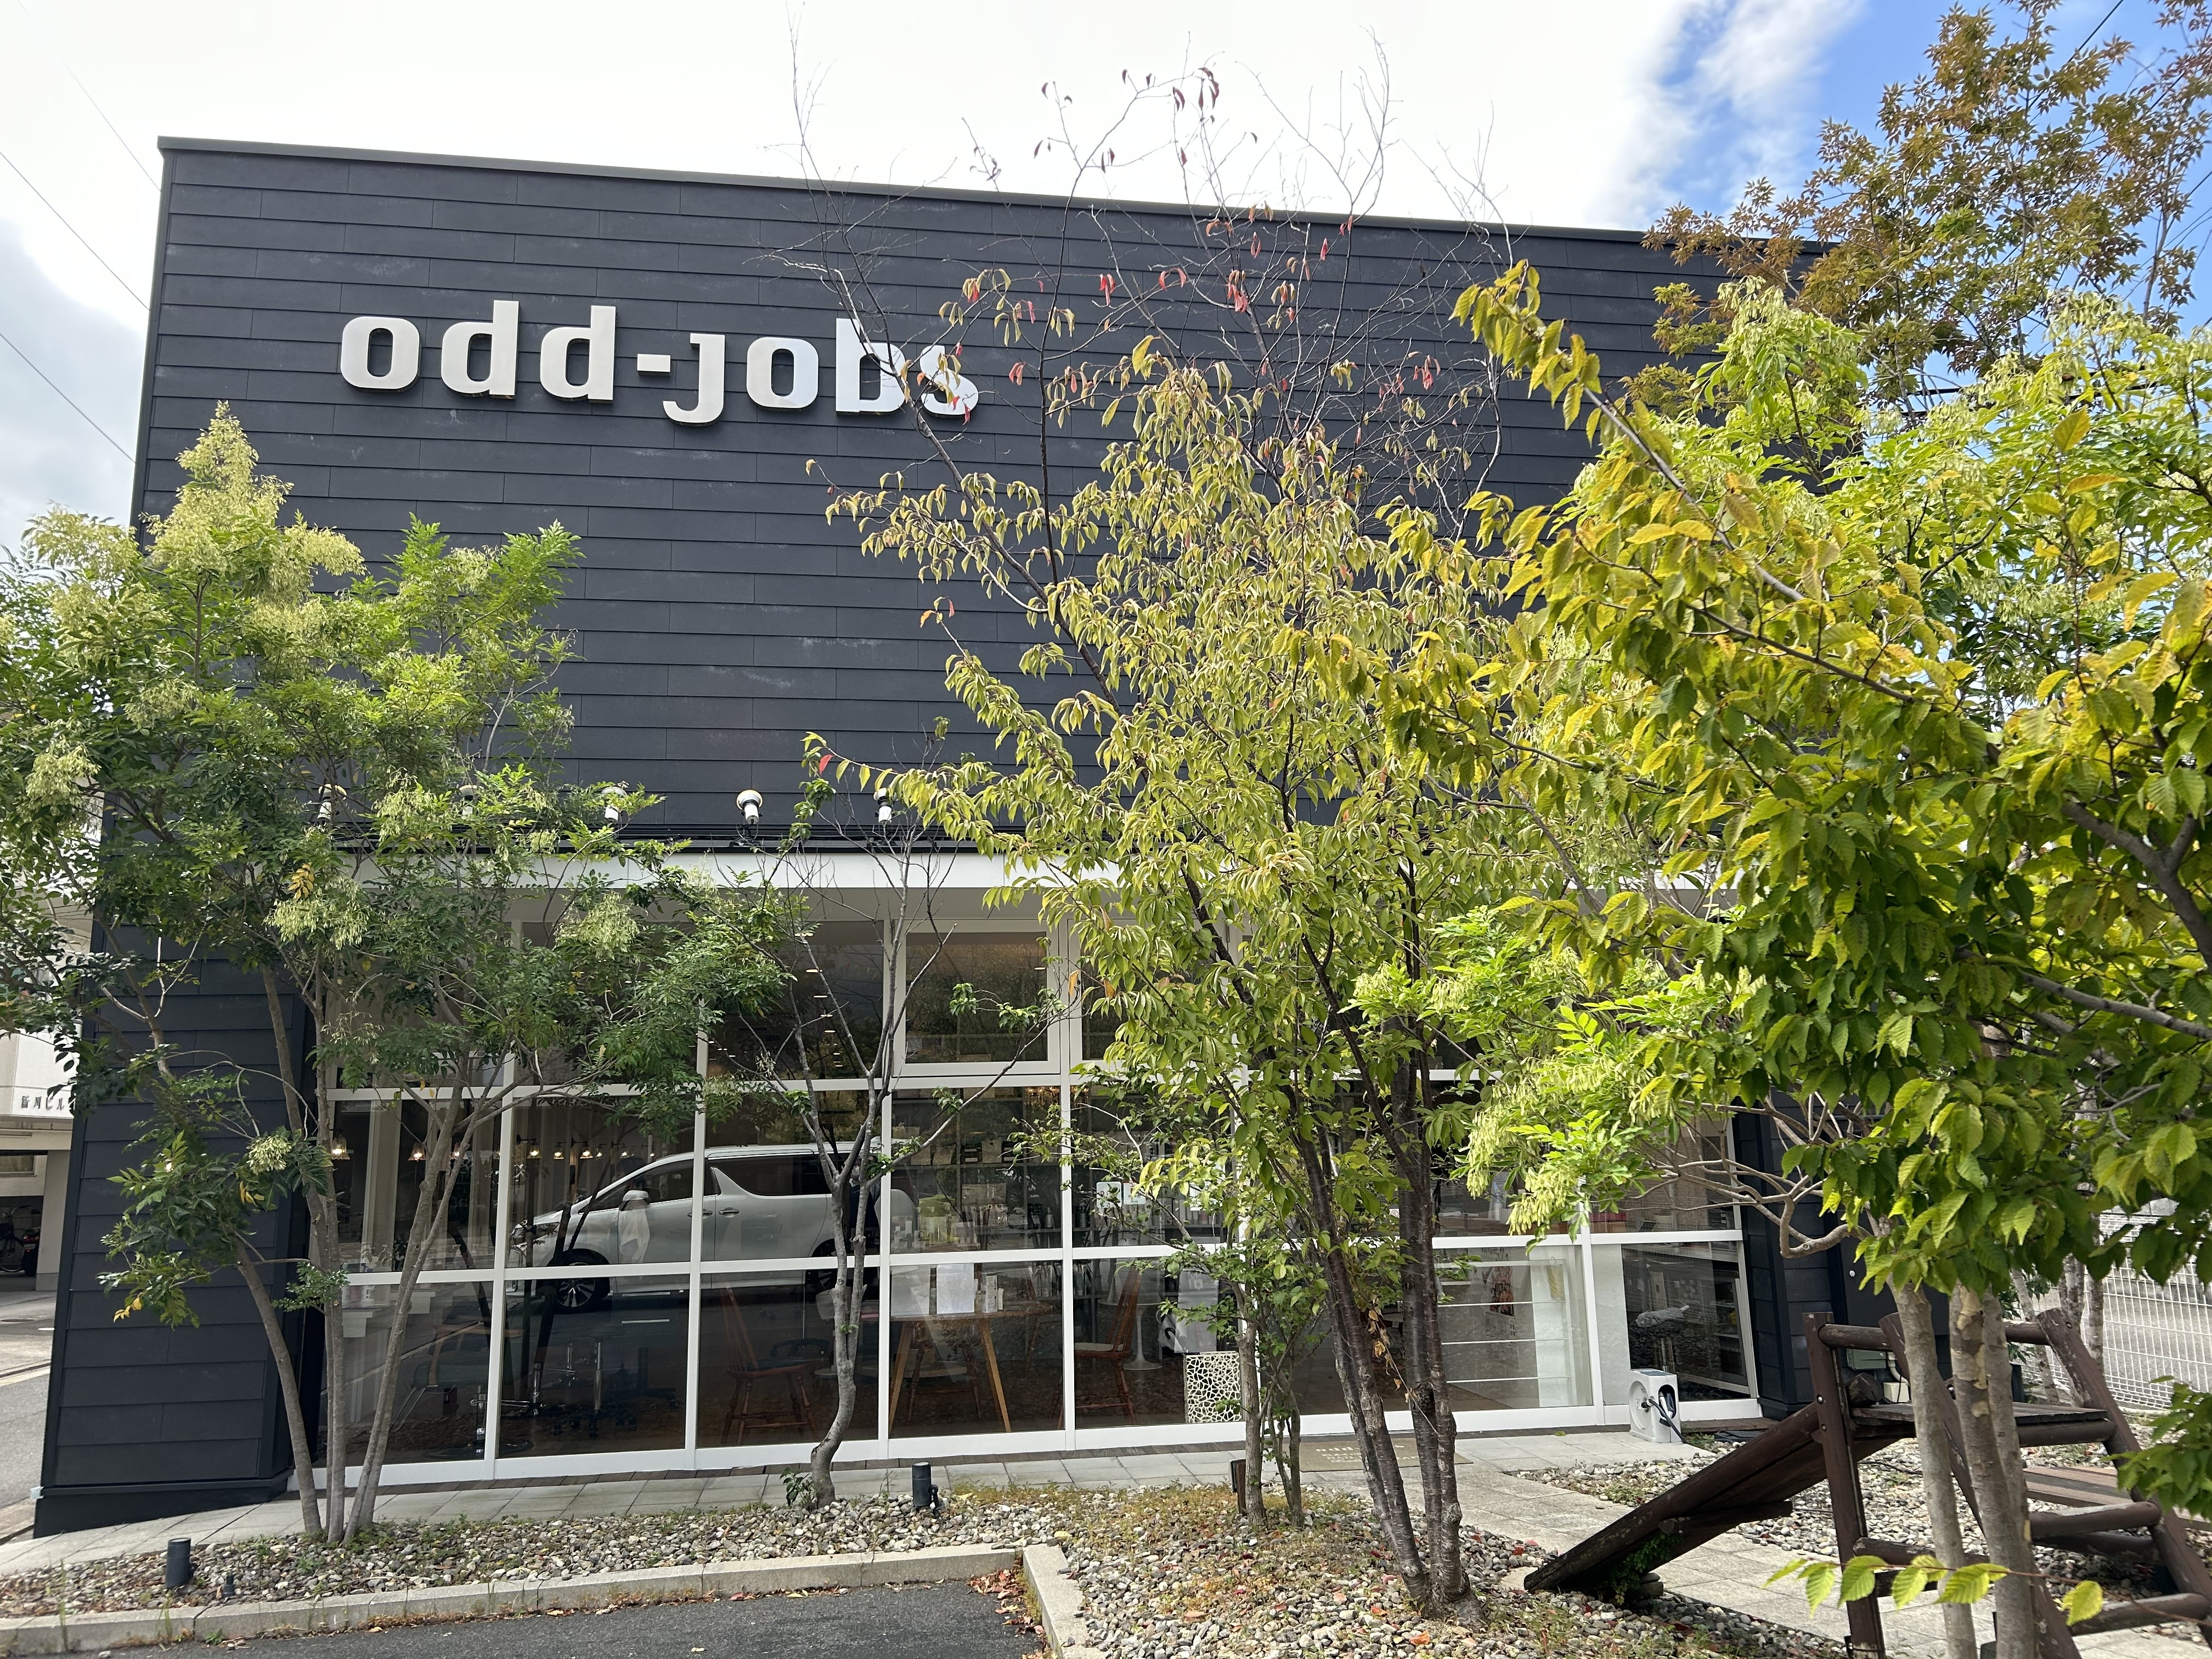 odd-jobs NAIL 府中店のアイキャッチ画像